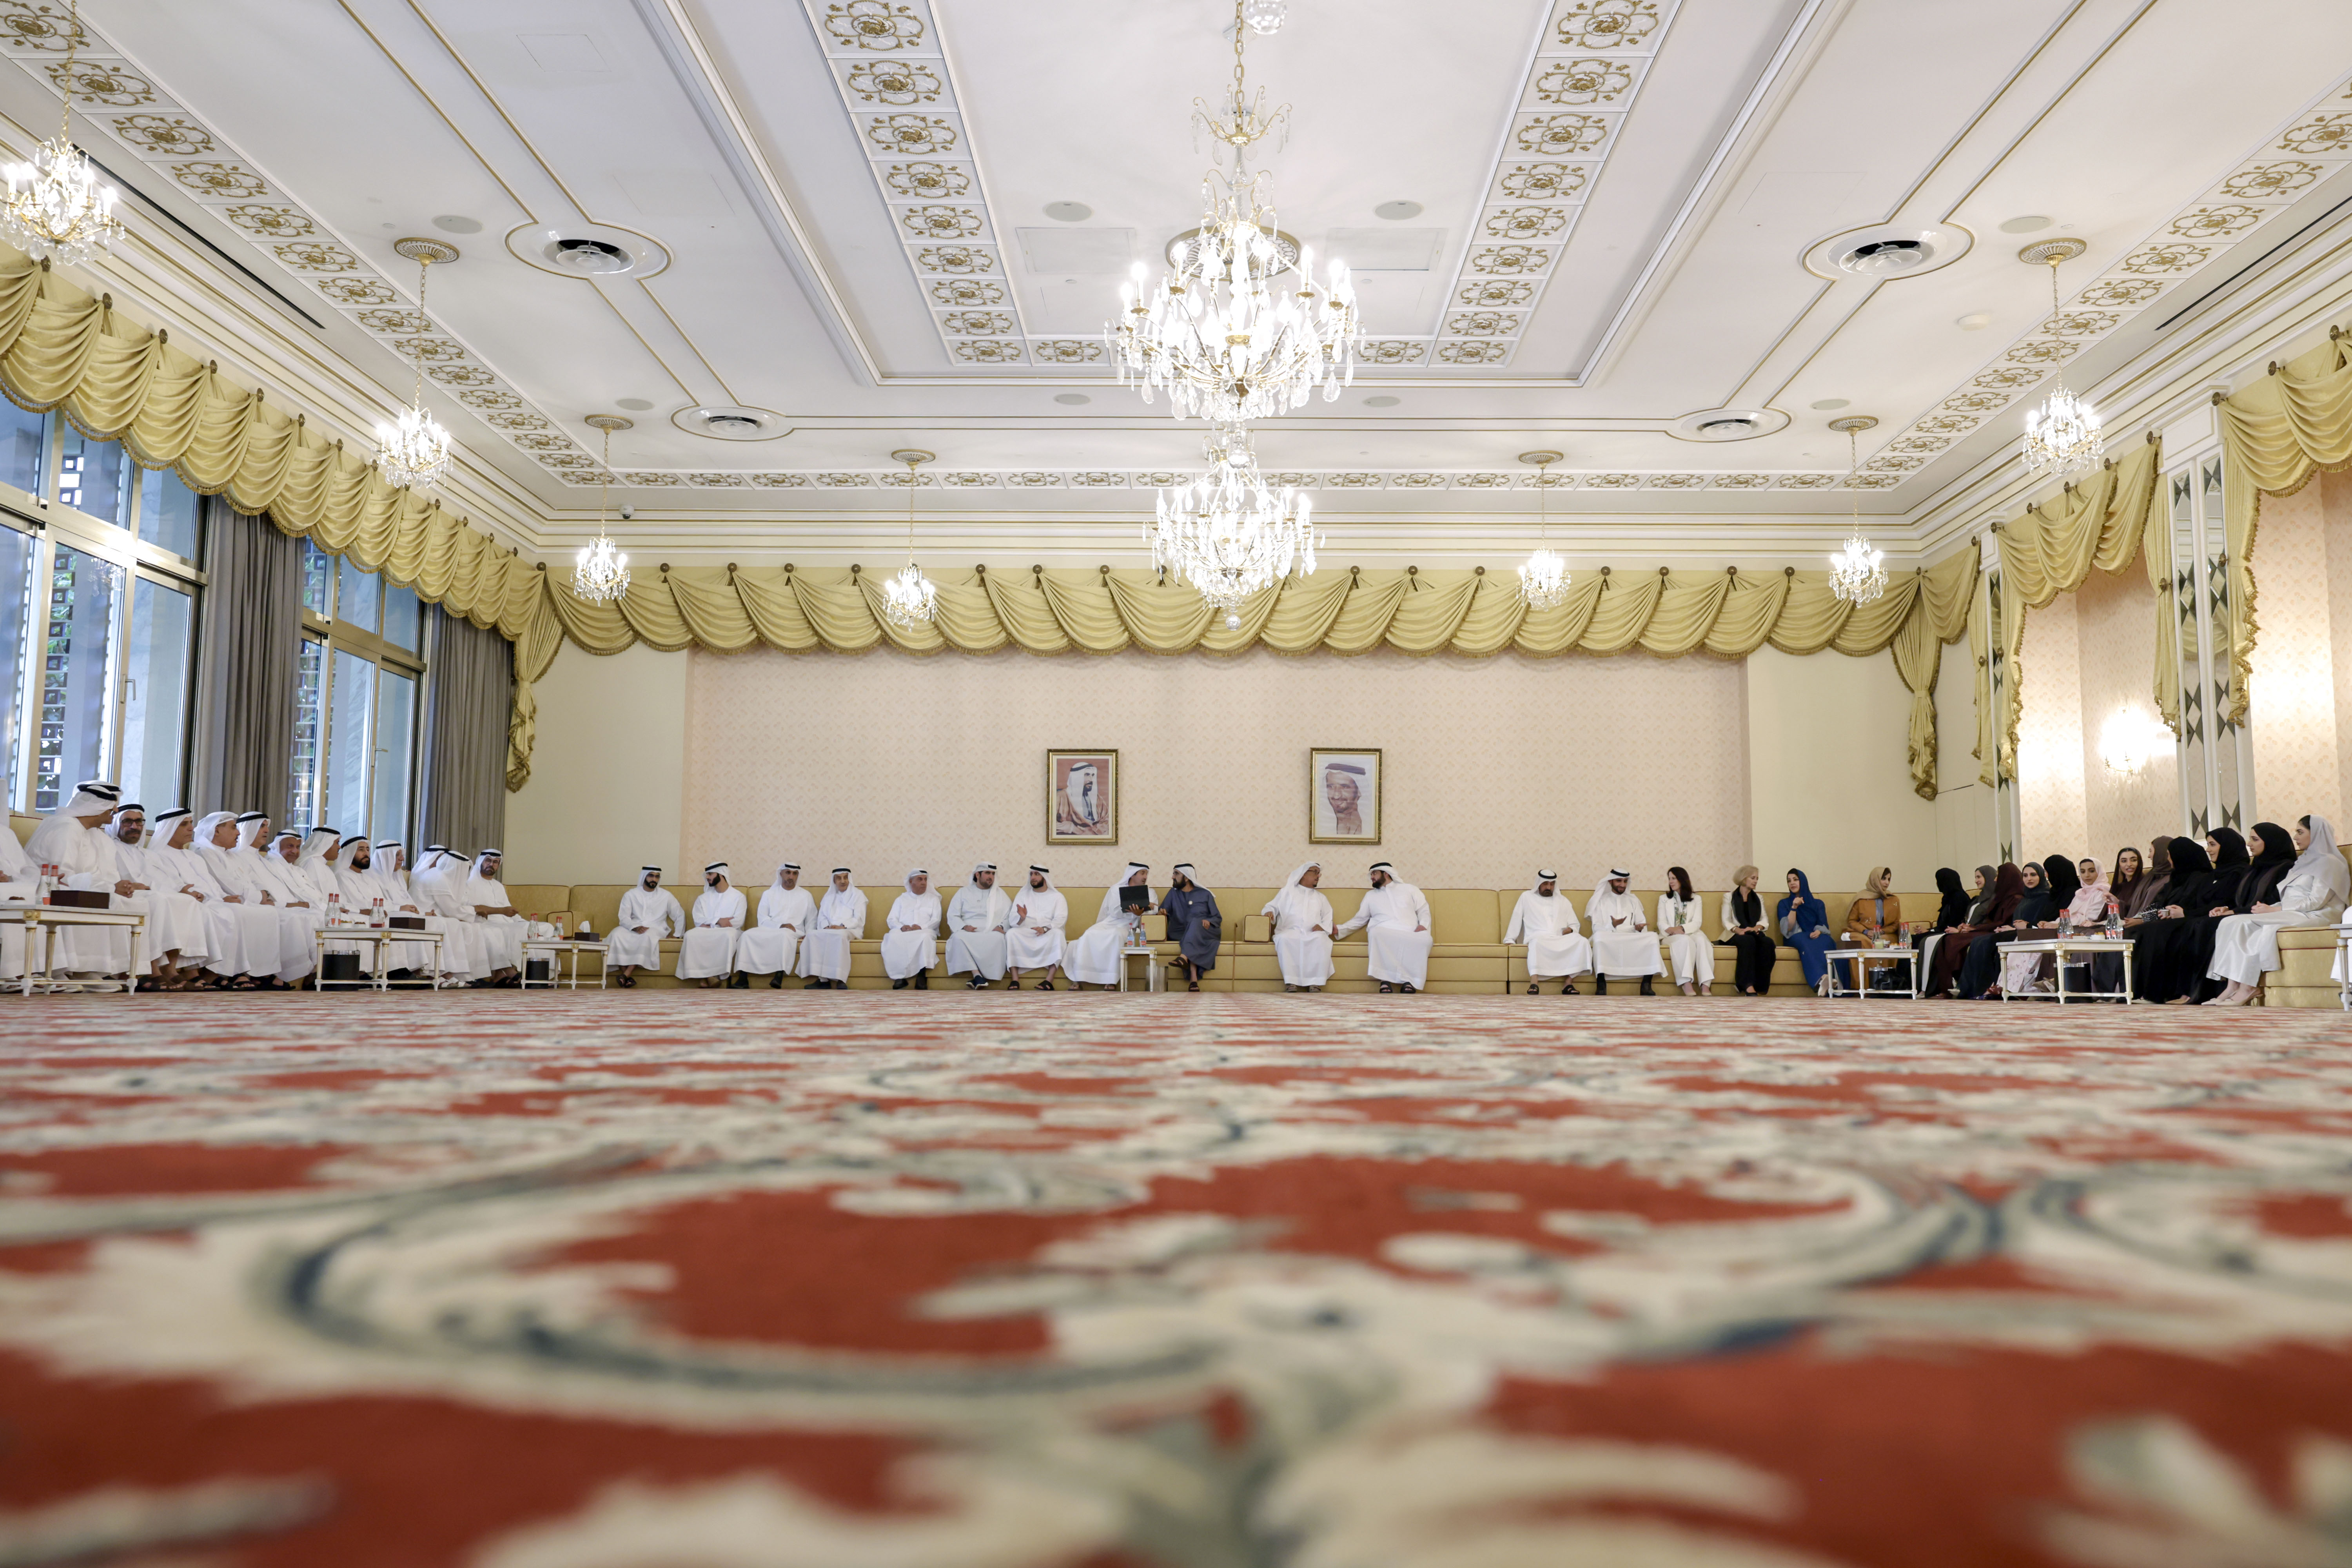 His Highness Sheikh Mohammed bin Rashid Al Maktoum - Mohammed bin Rashid meets with local dignitaries, businessmen, investors and senior officials at Union House in Dubai